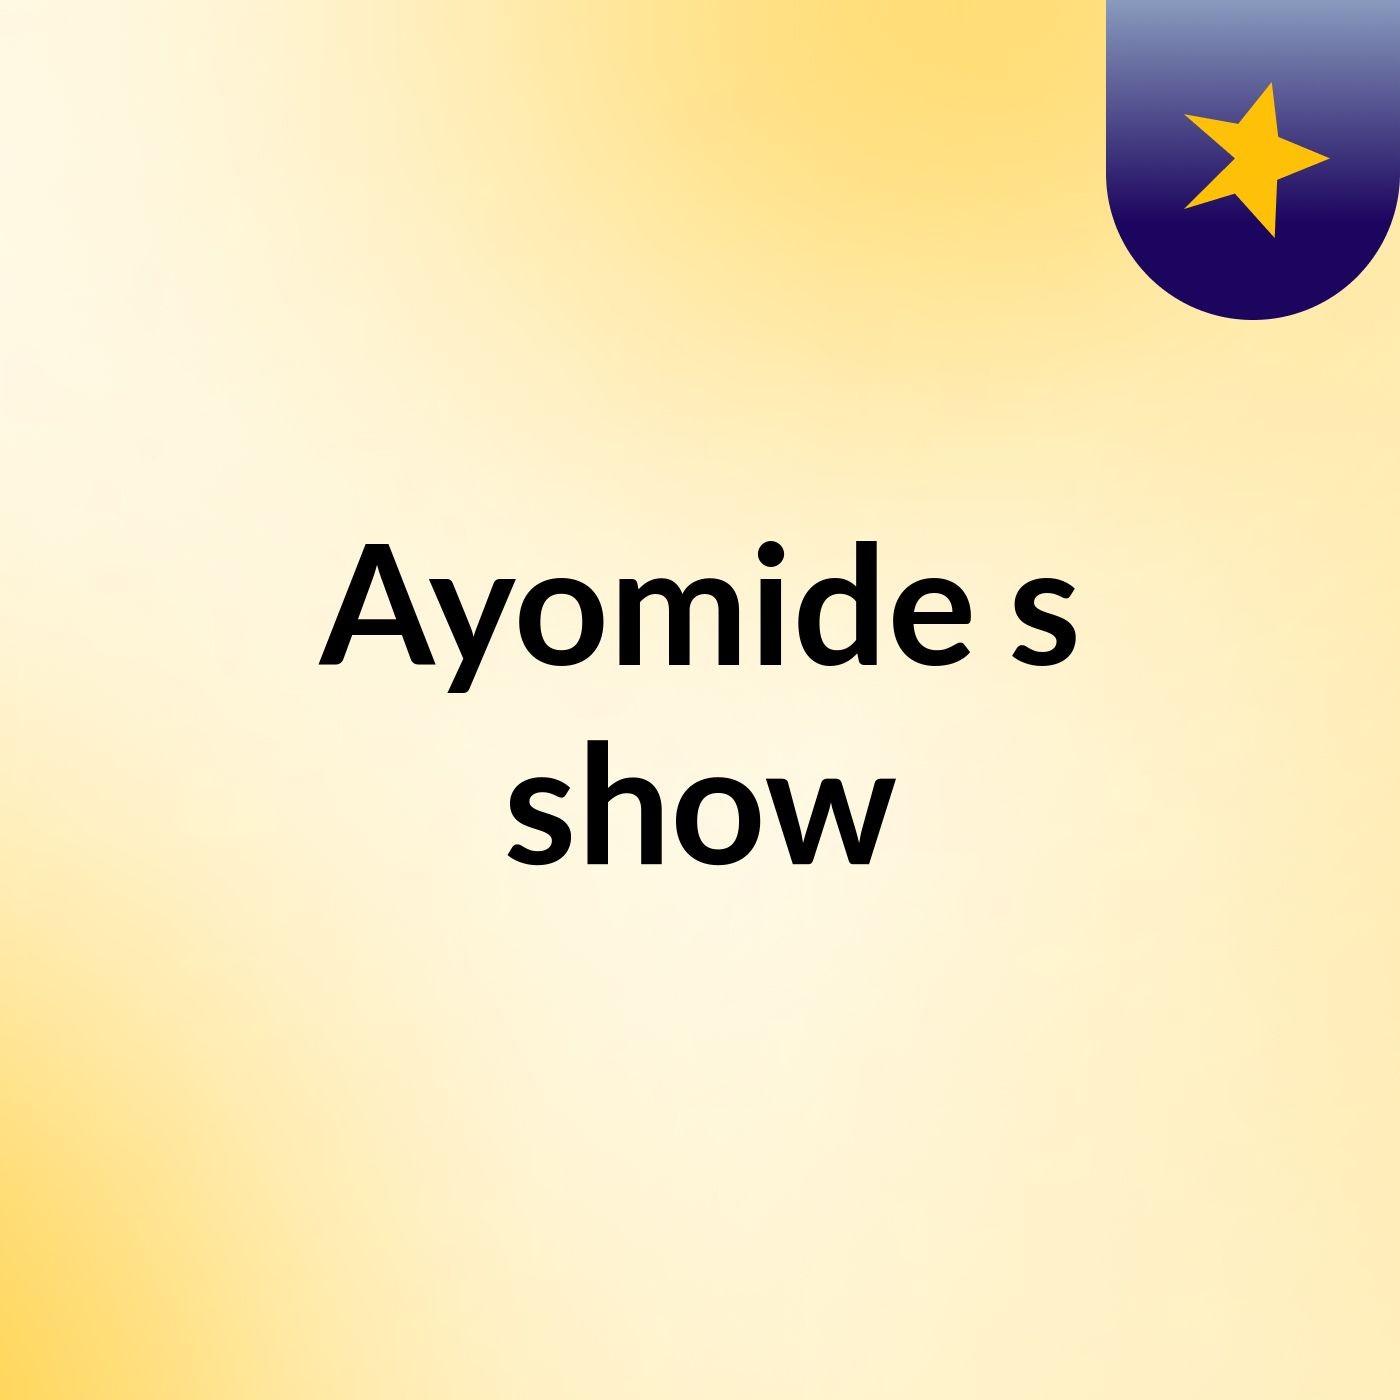 Ayomide's show